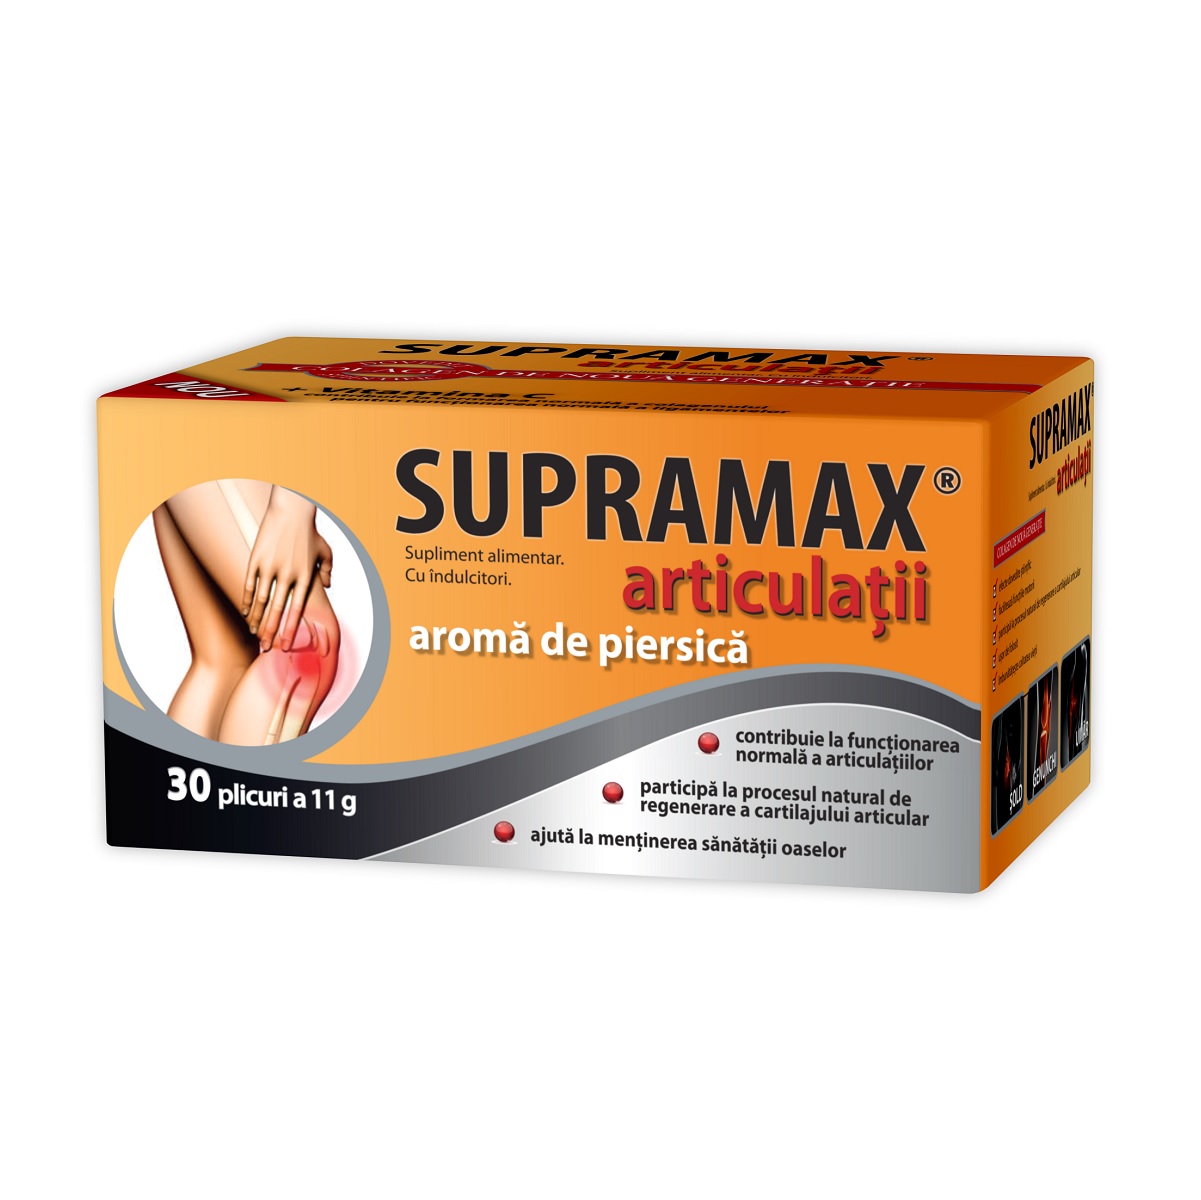 Supramax articulatii Direct, 12g colagen, 30 fiole, Zdrovit